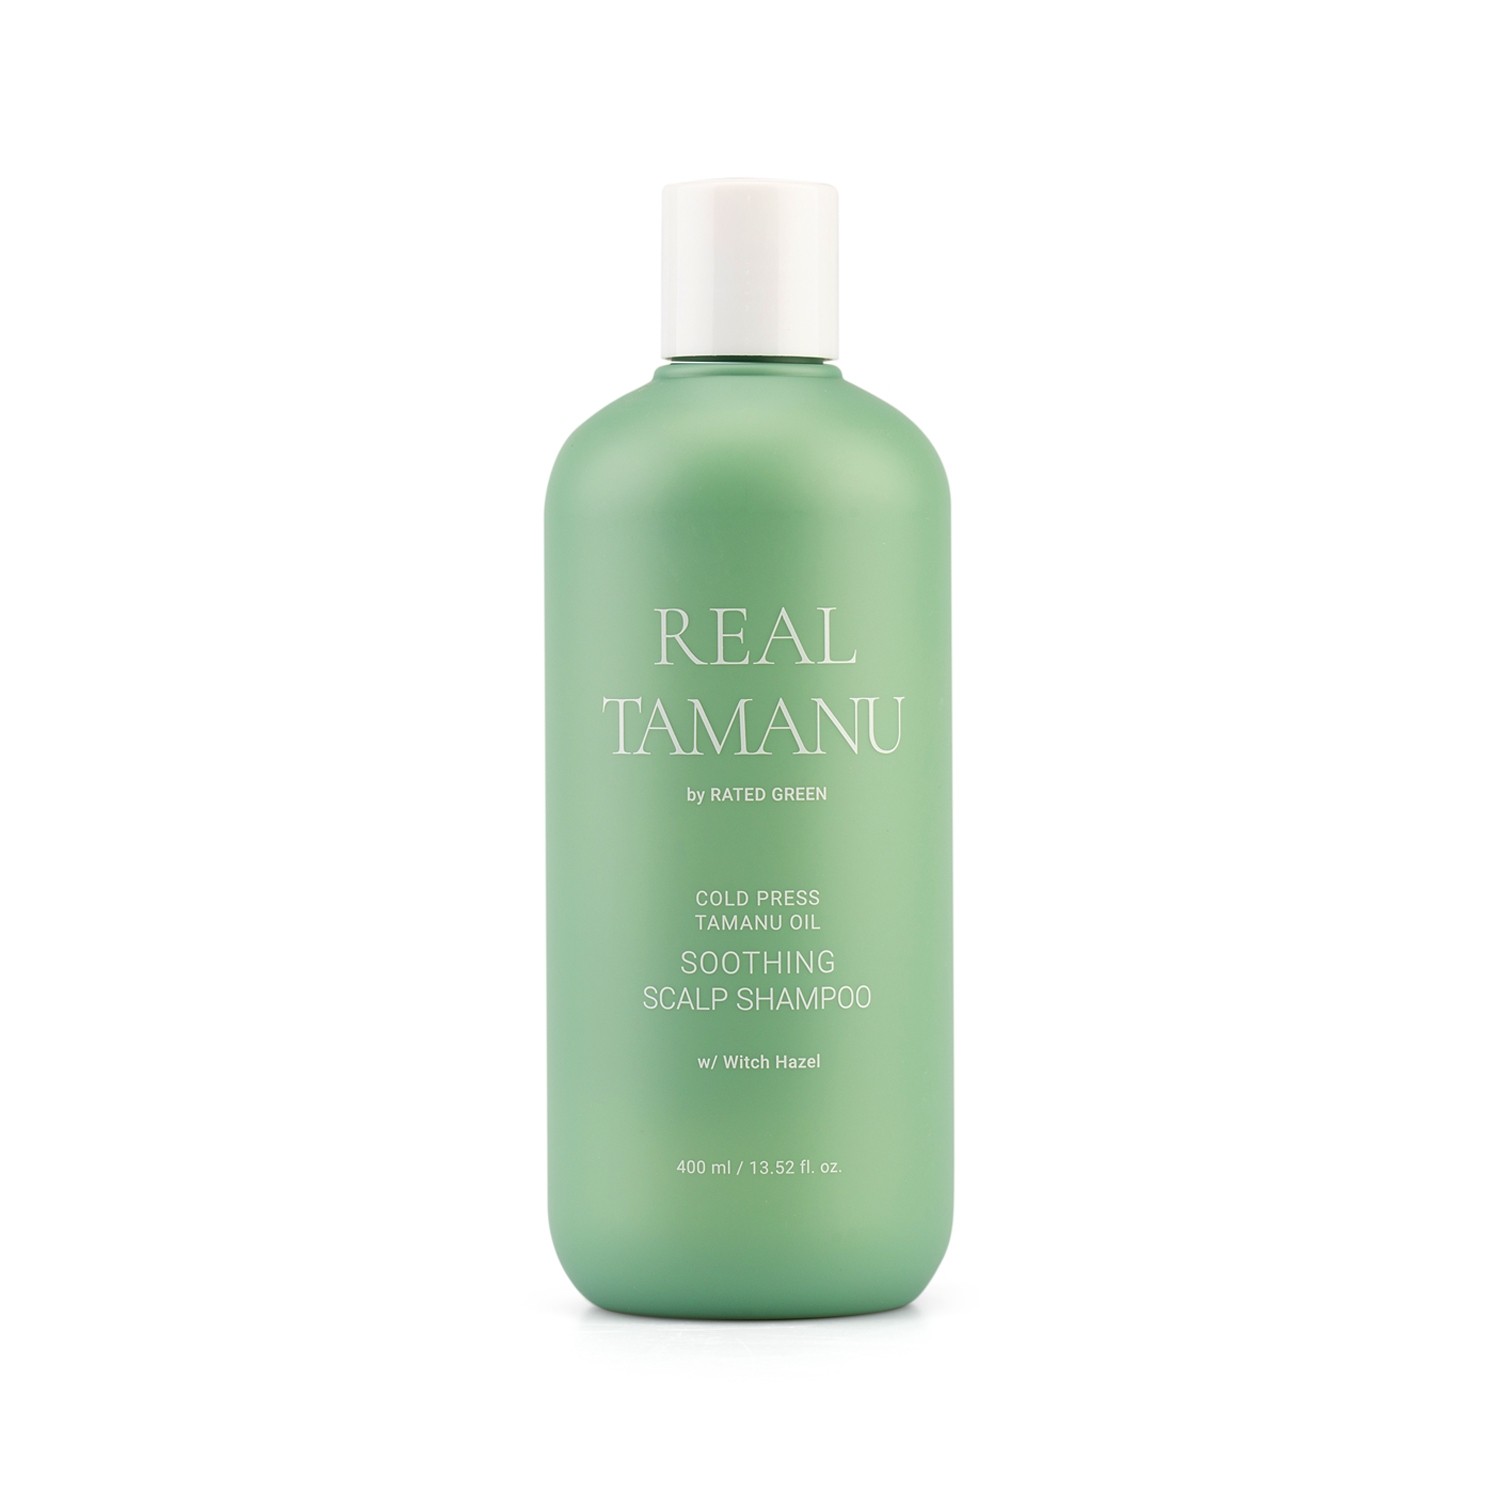 Rated Green Успокаивающий шампунь с маслом таману Tamanu Oil Soothing Scalp Shampoo